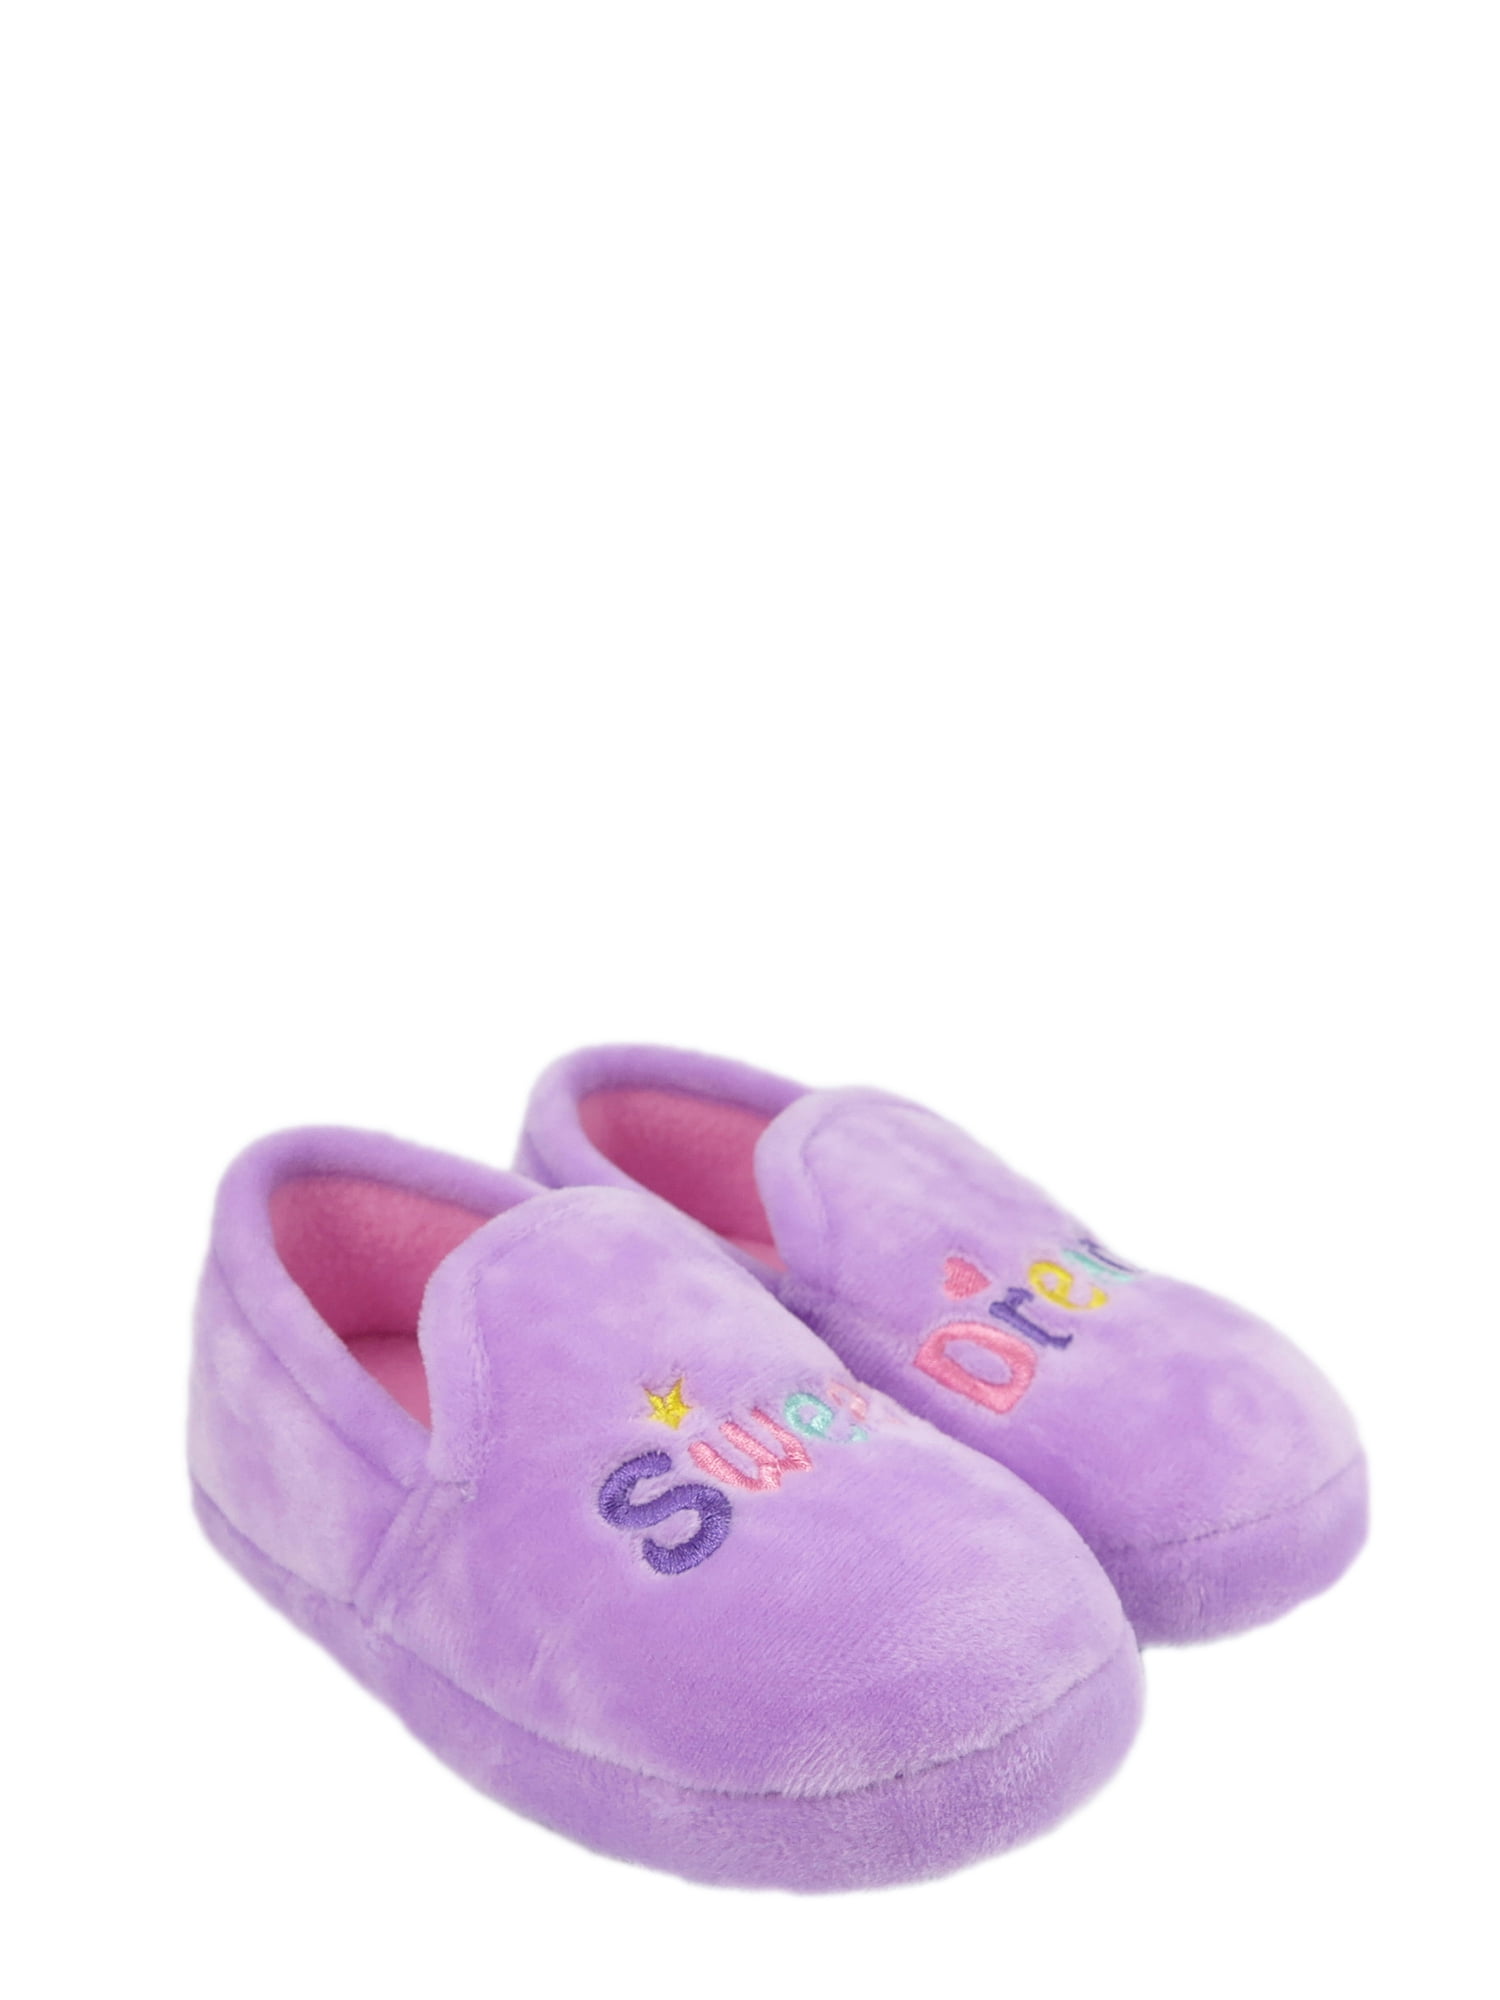 walmart baby slippers